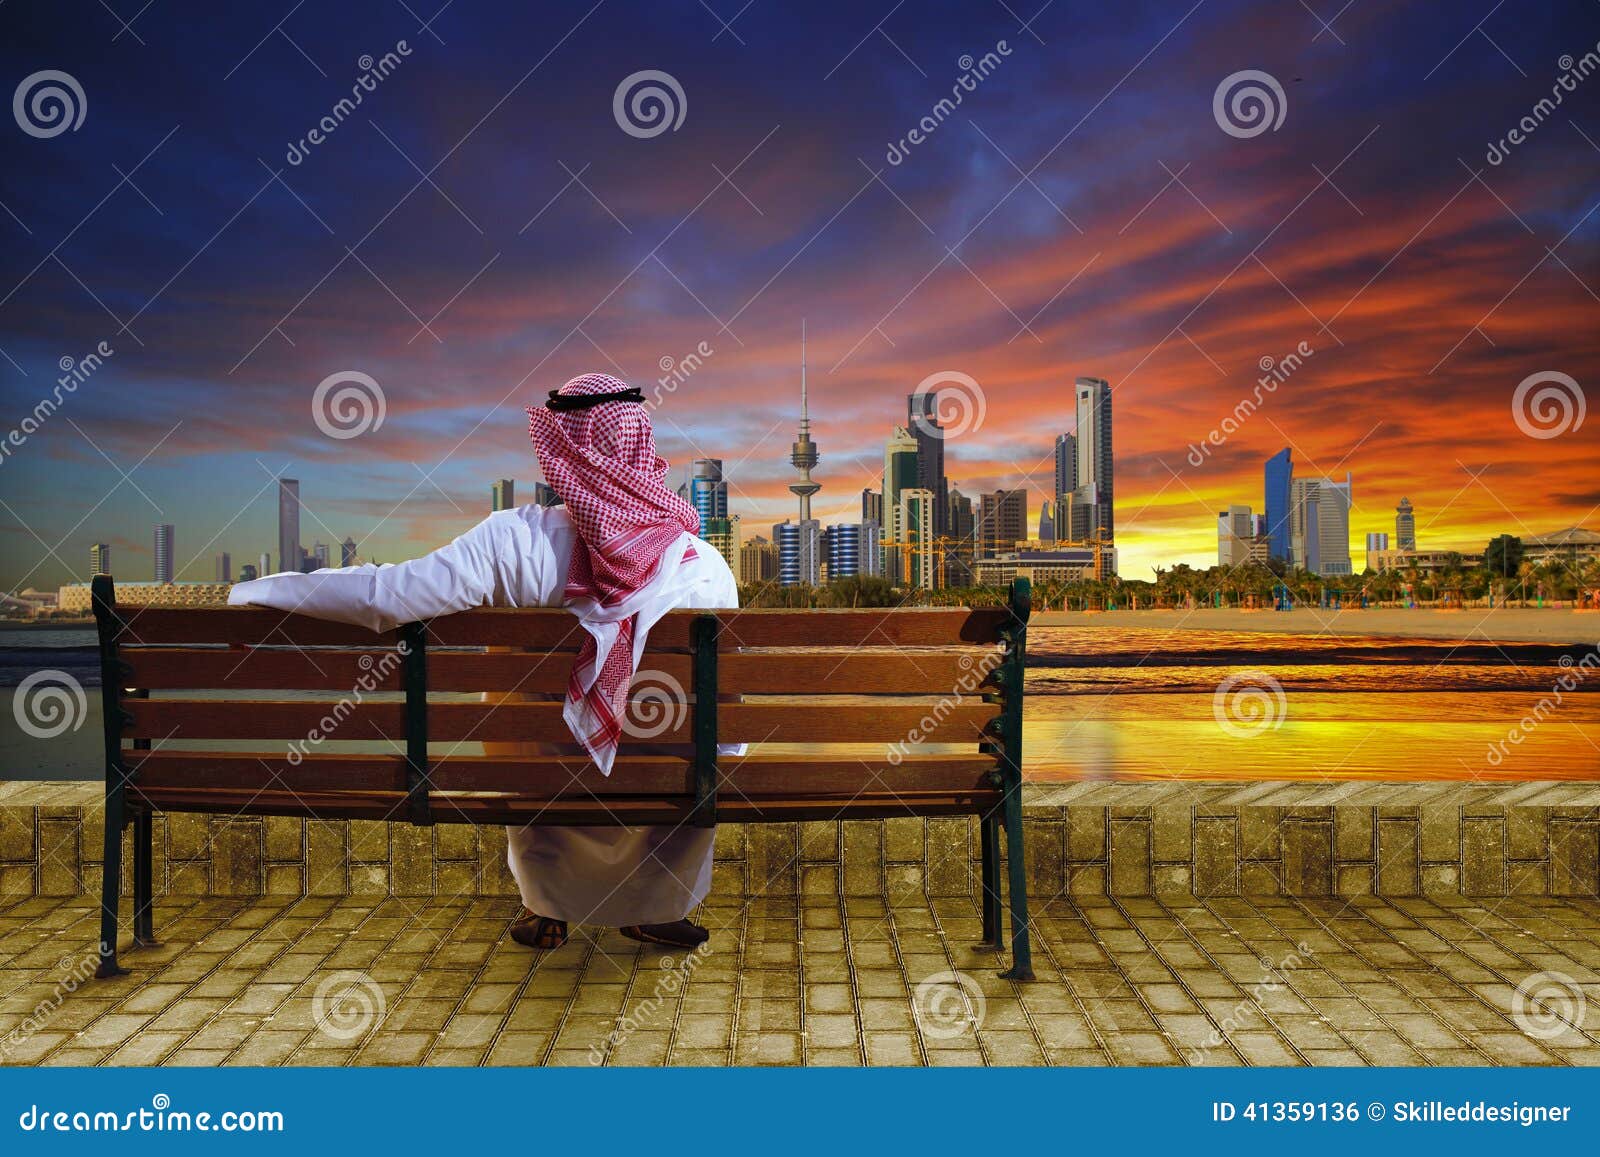 cityscape of kuwait